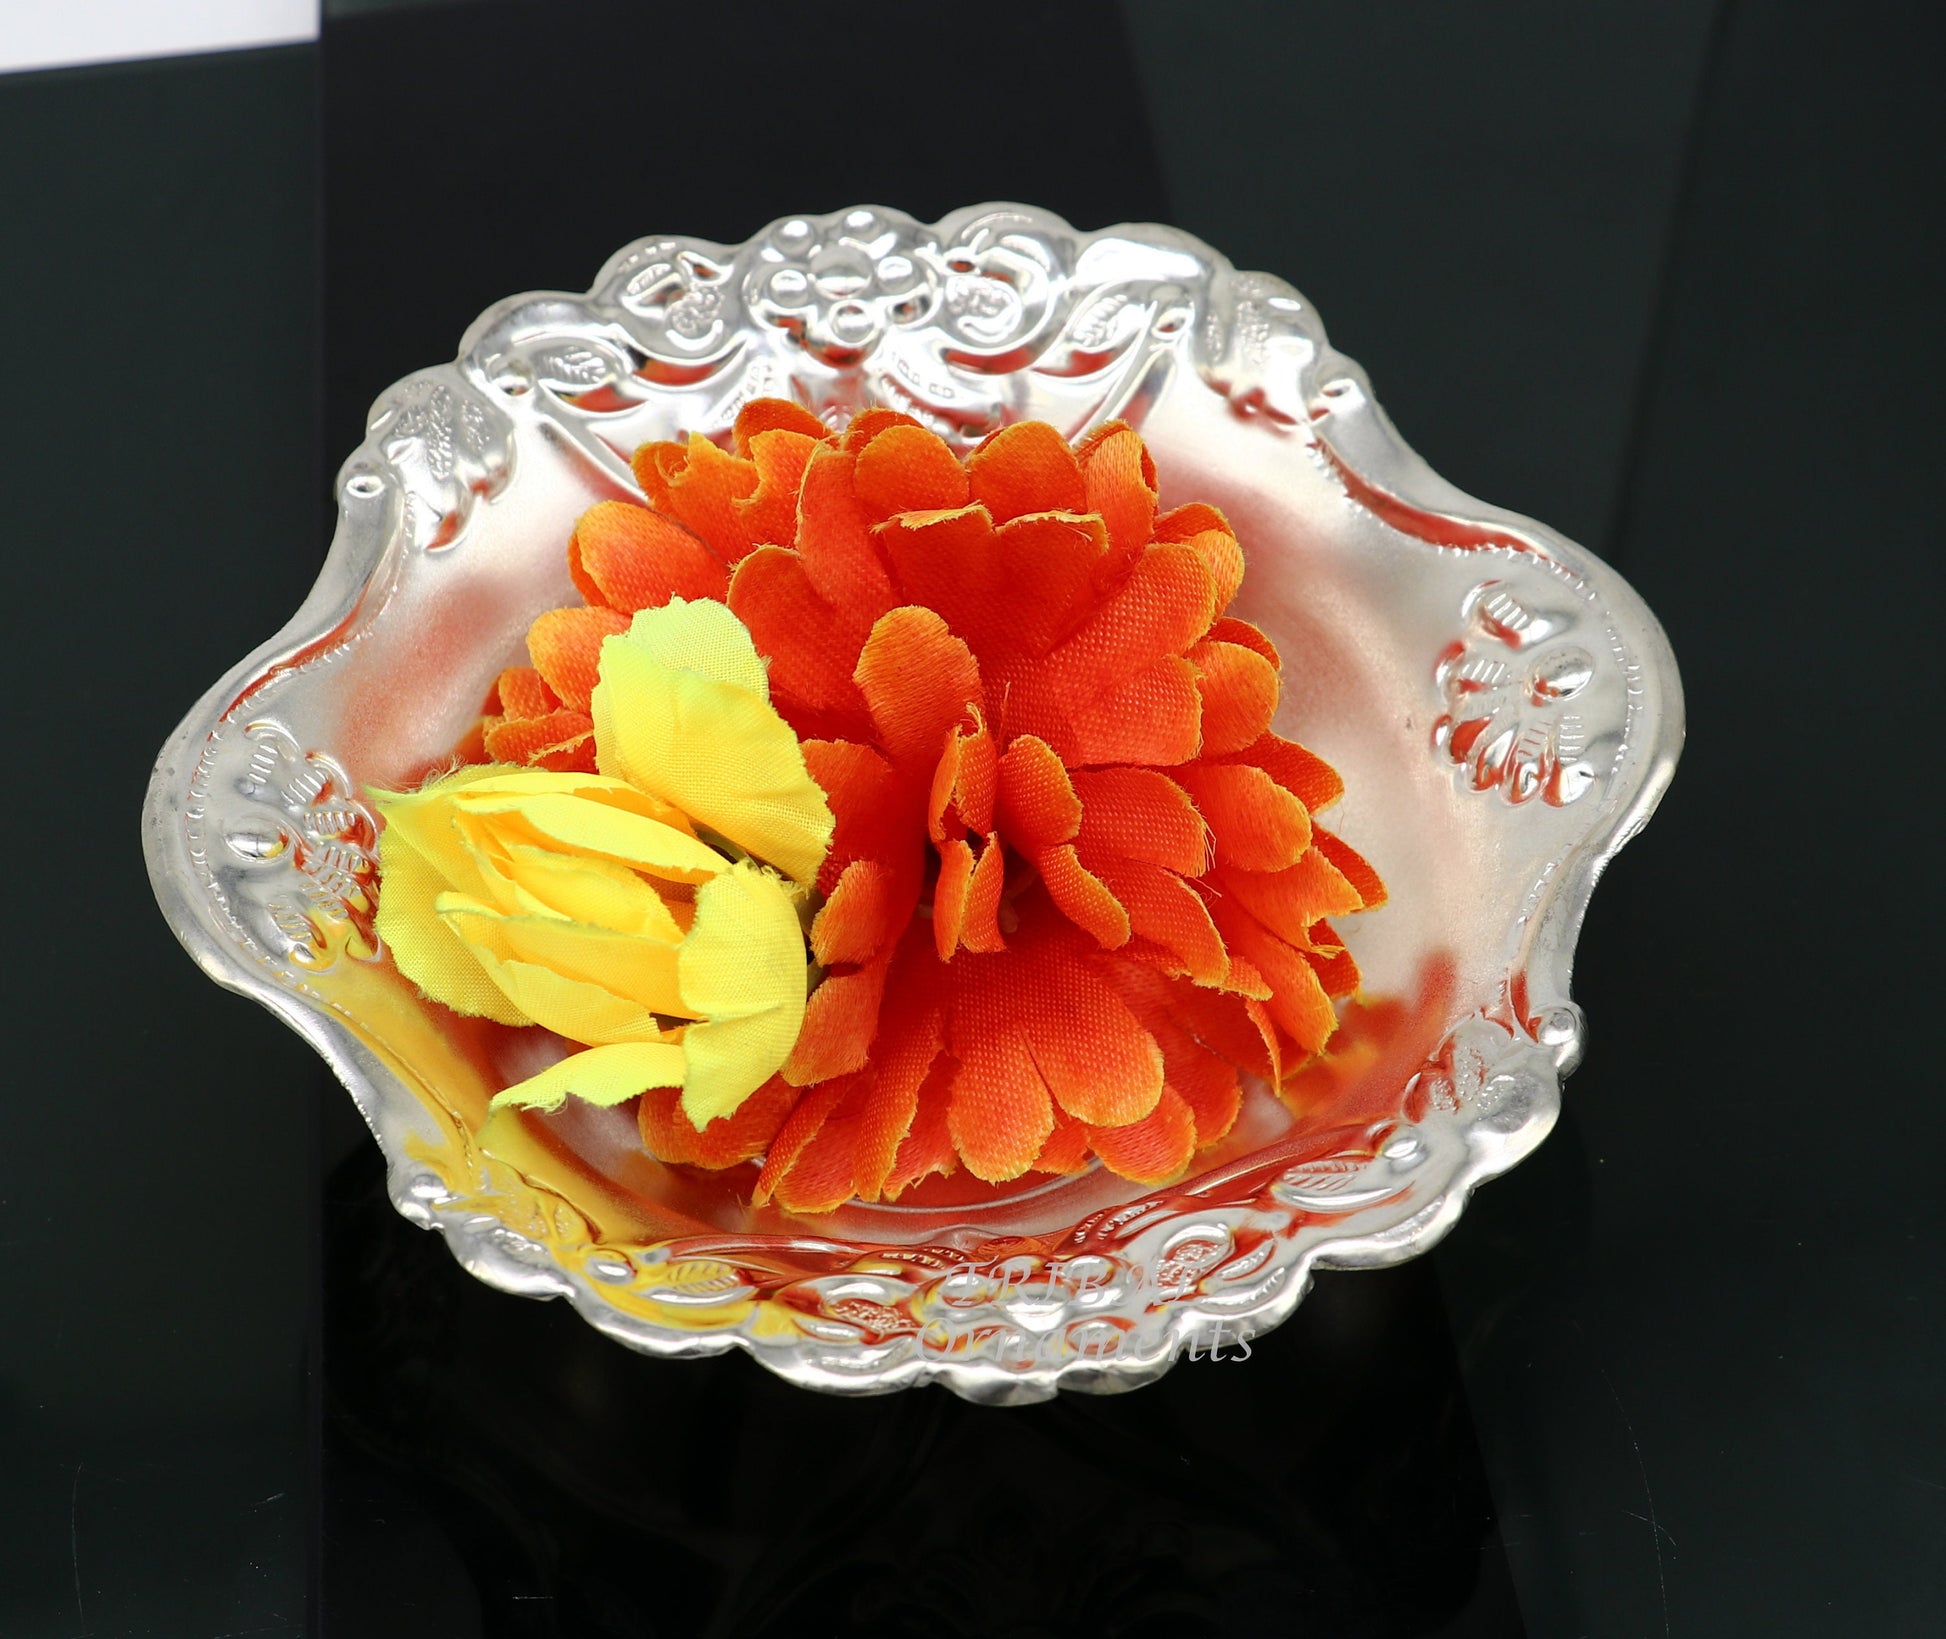 999 fine silver customized design Prasadam bowl, puja utensils, worshipping article, silver Idols serving bowl temple article su859 - TRIBAL ORNAMENTS